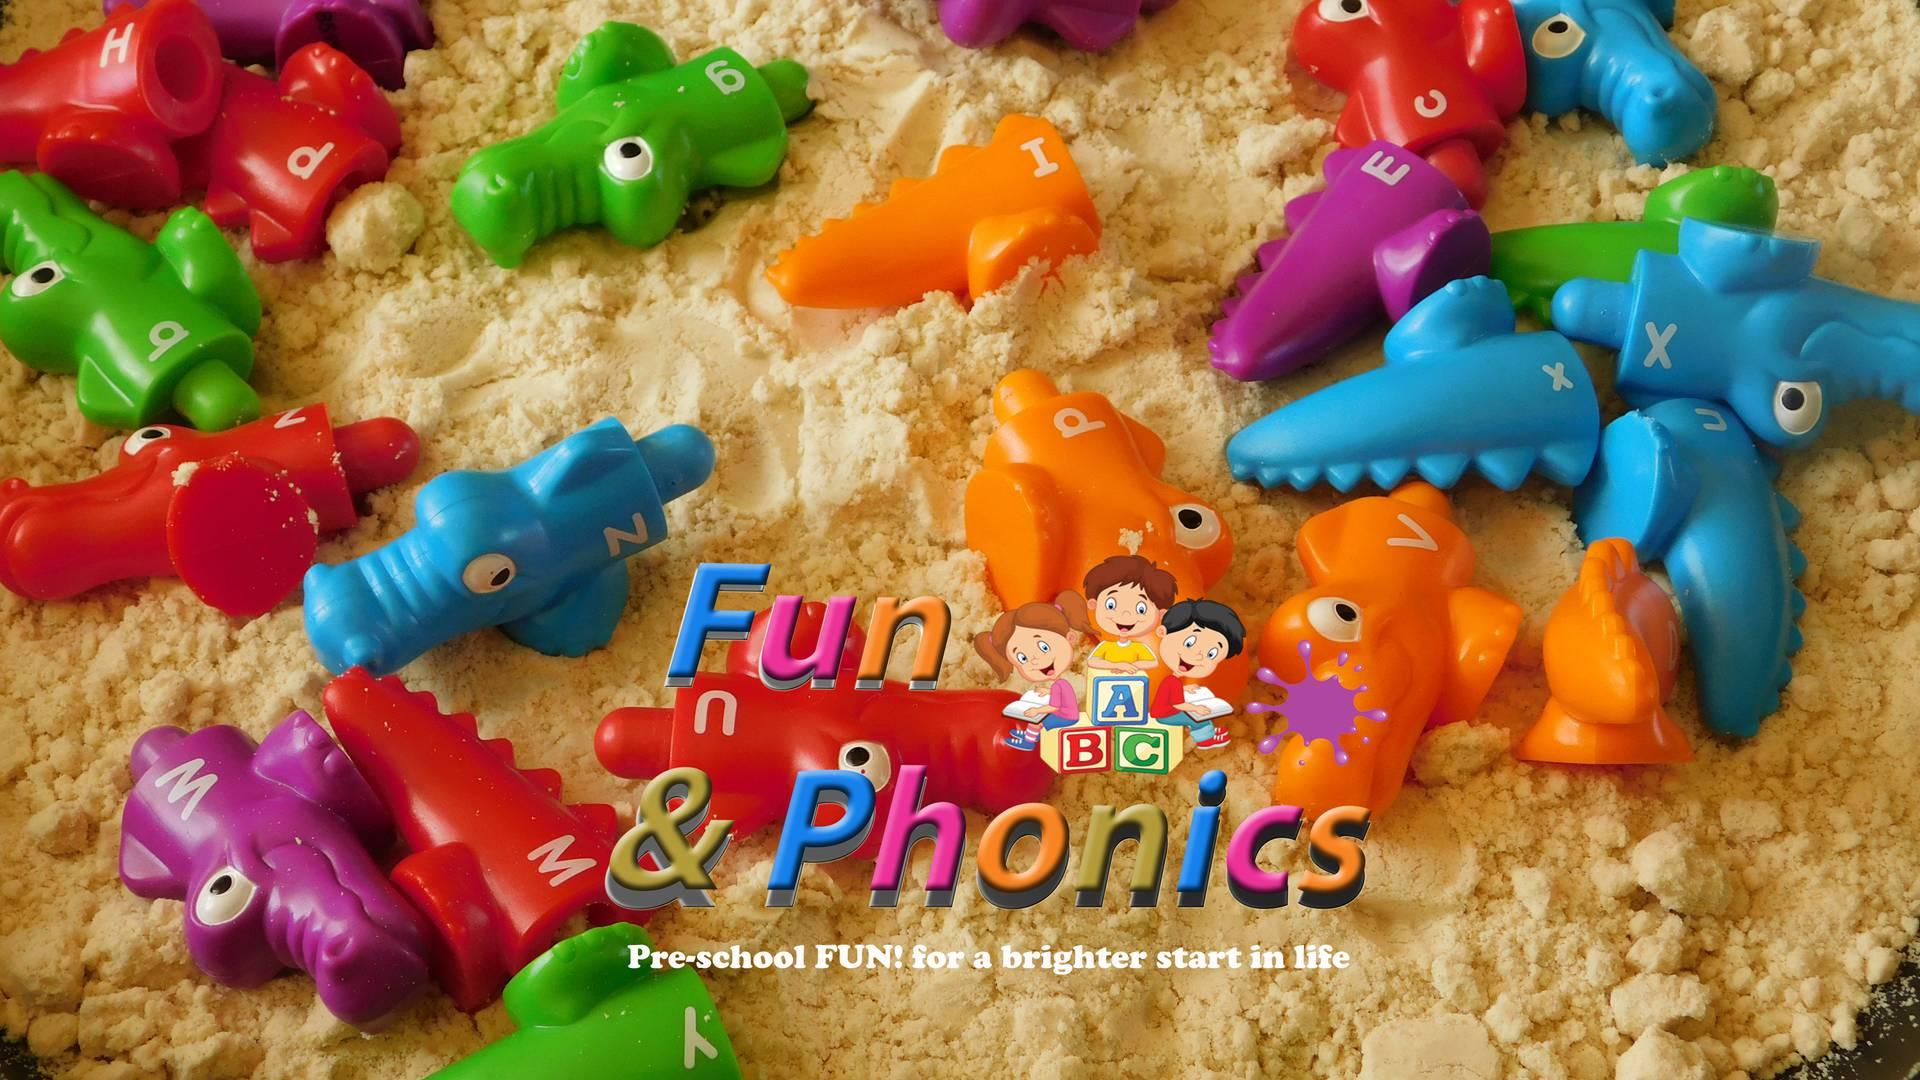 Fun & Phonics photo